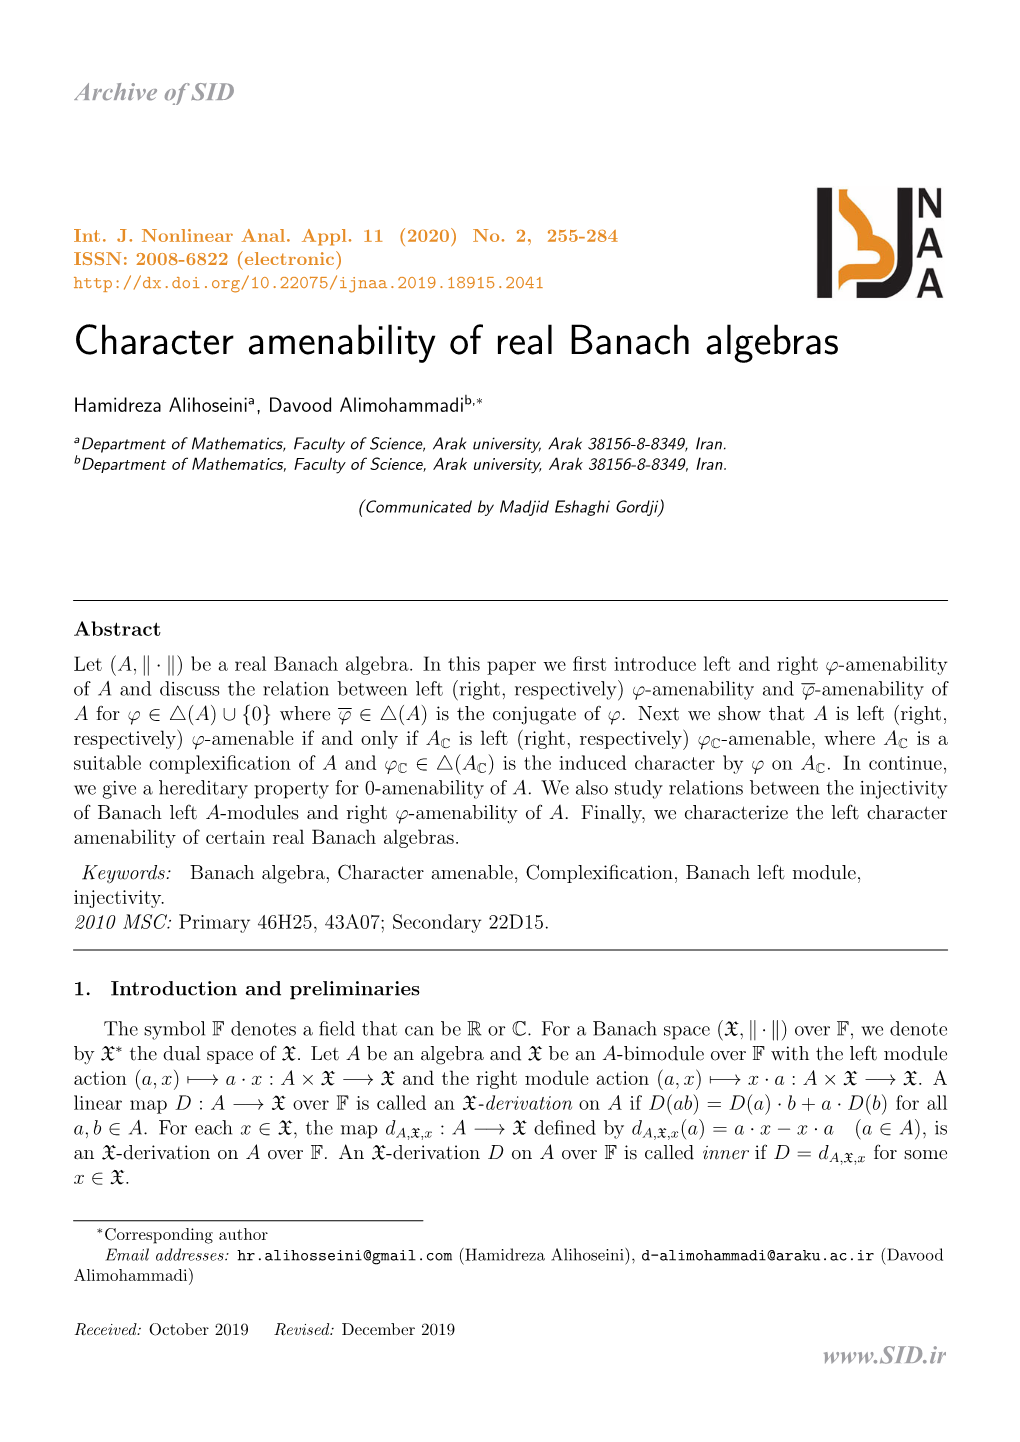 Character Amenability of Real Banach Algebras